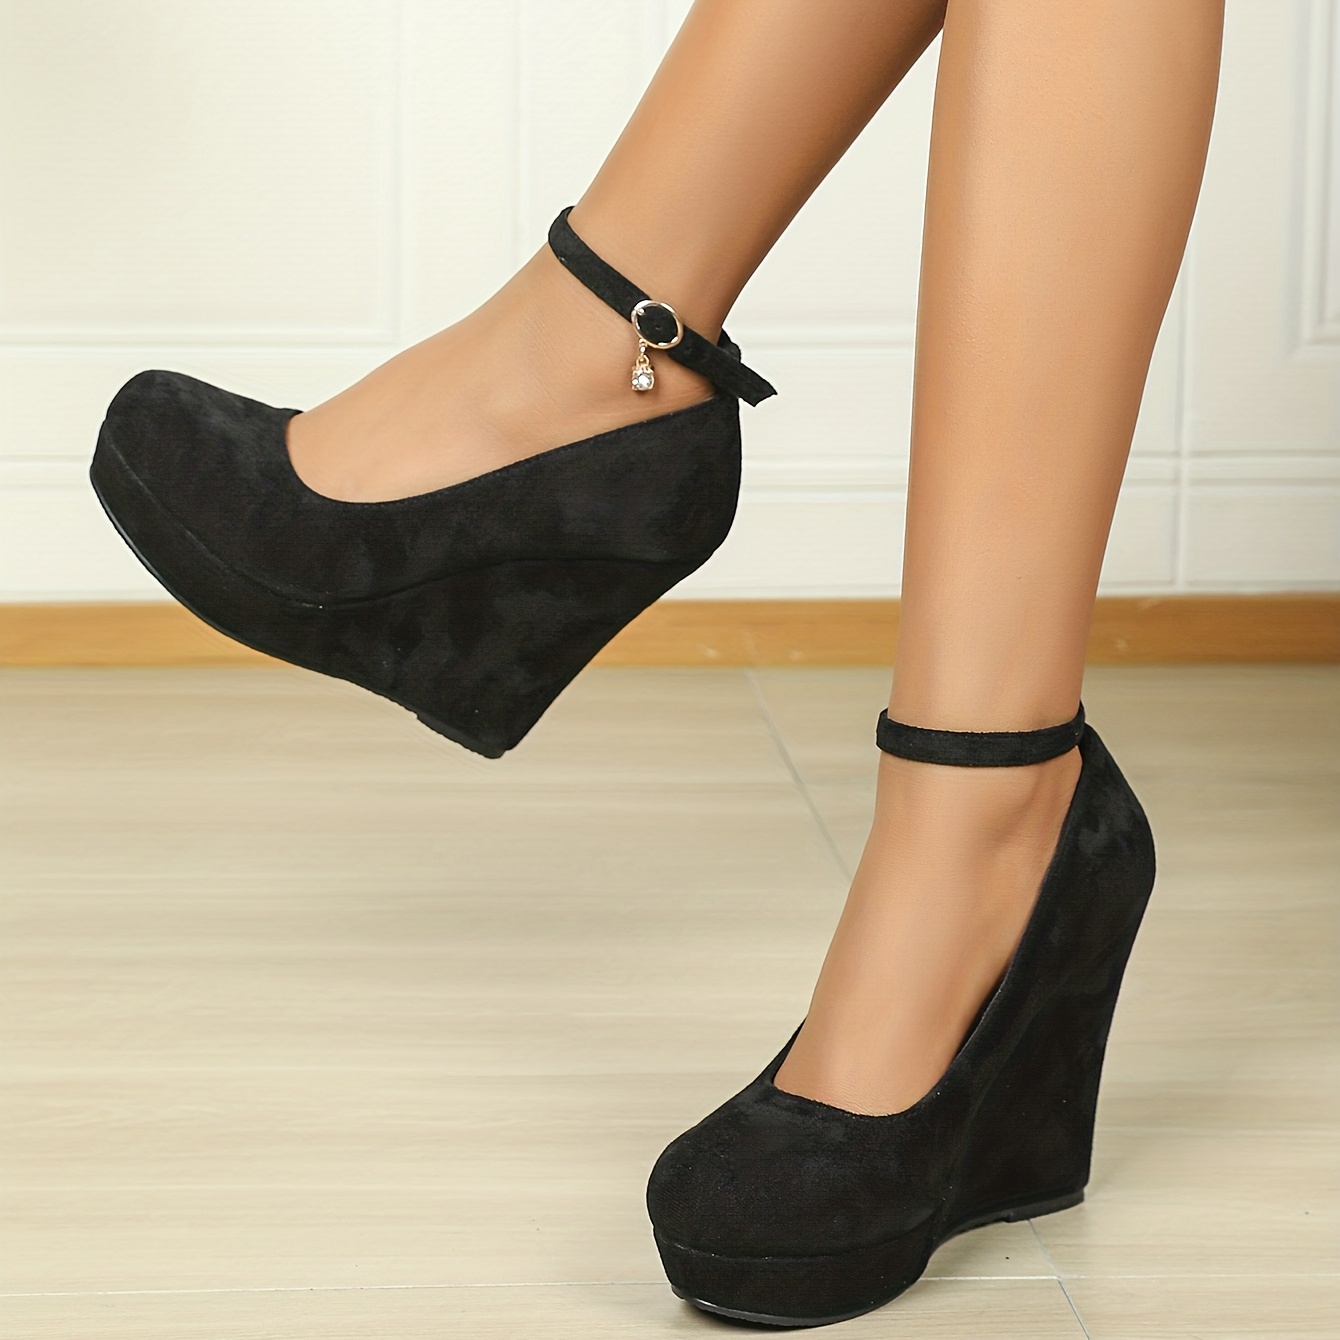 Women's Platform Wedge Heels, Flower Ankle Strap Round Toe High Heels,  Fashion Micro Suede Shoes